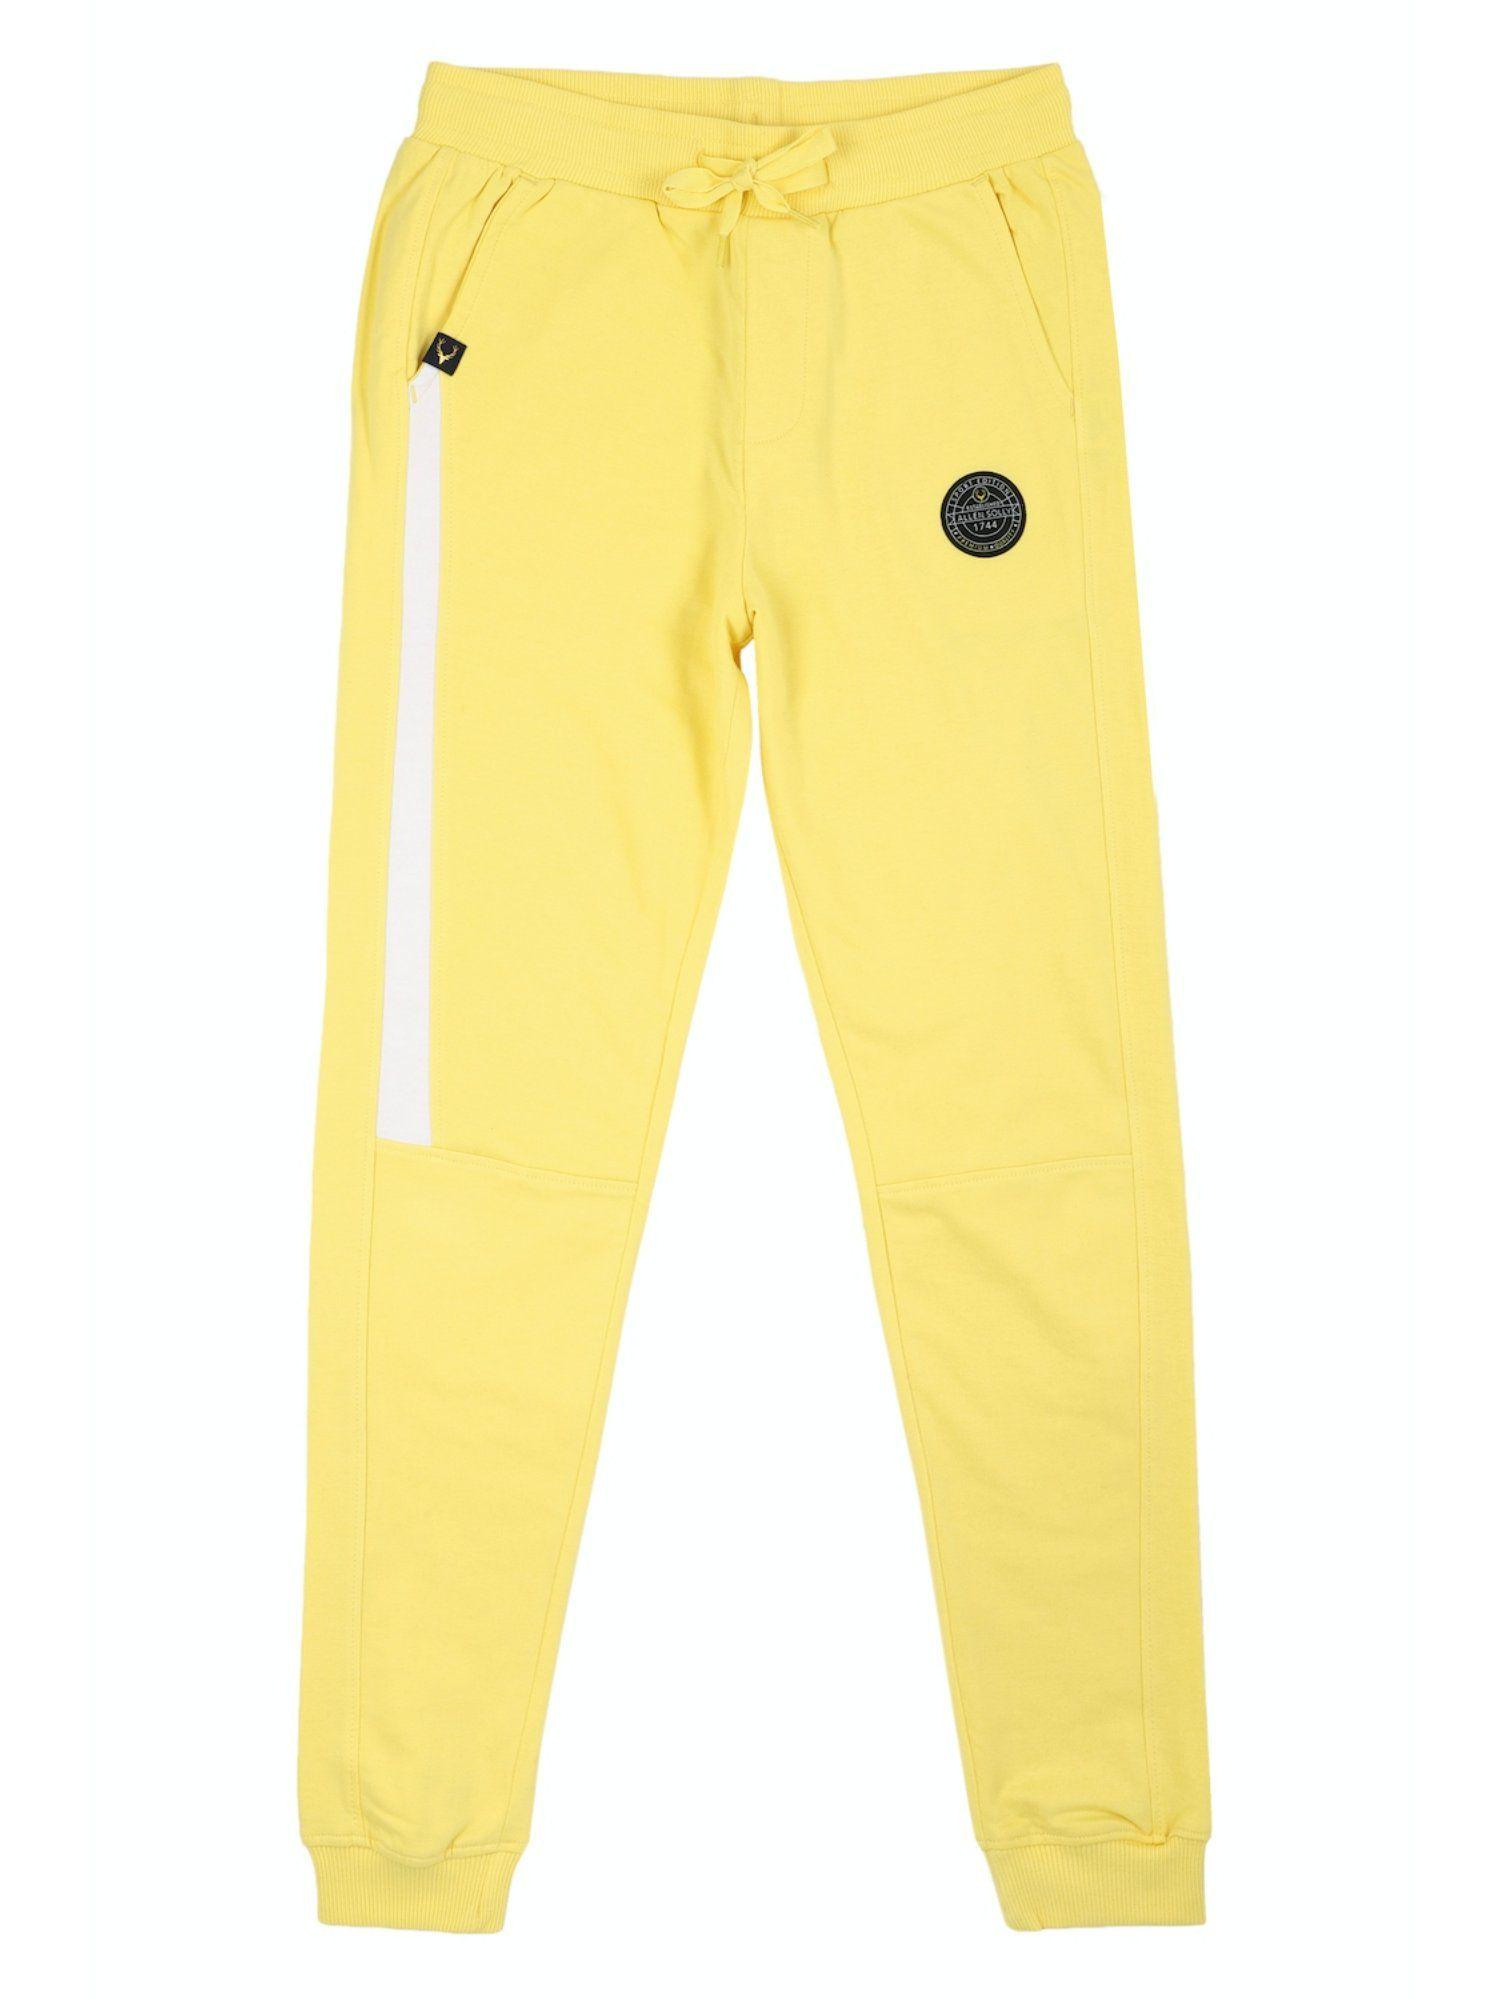 boys yellow regular fit patterned jogger pants